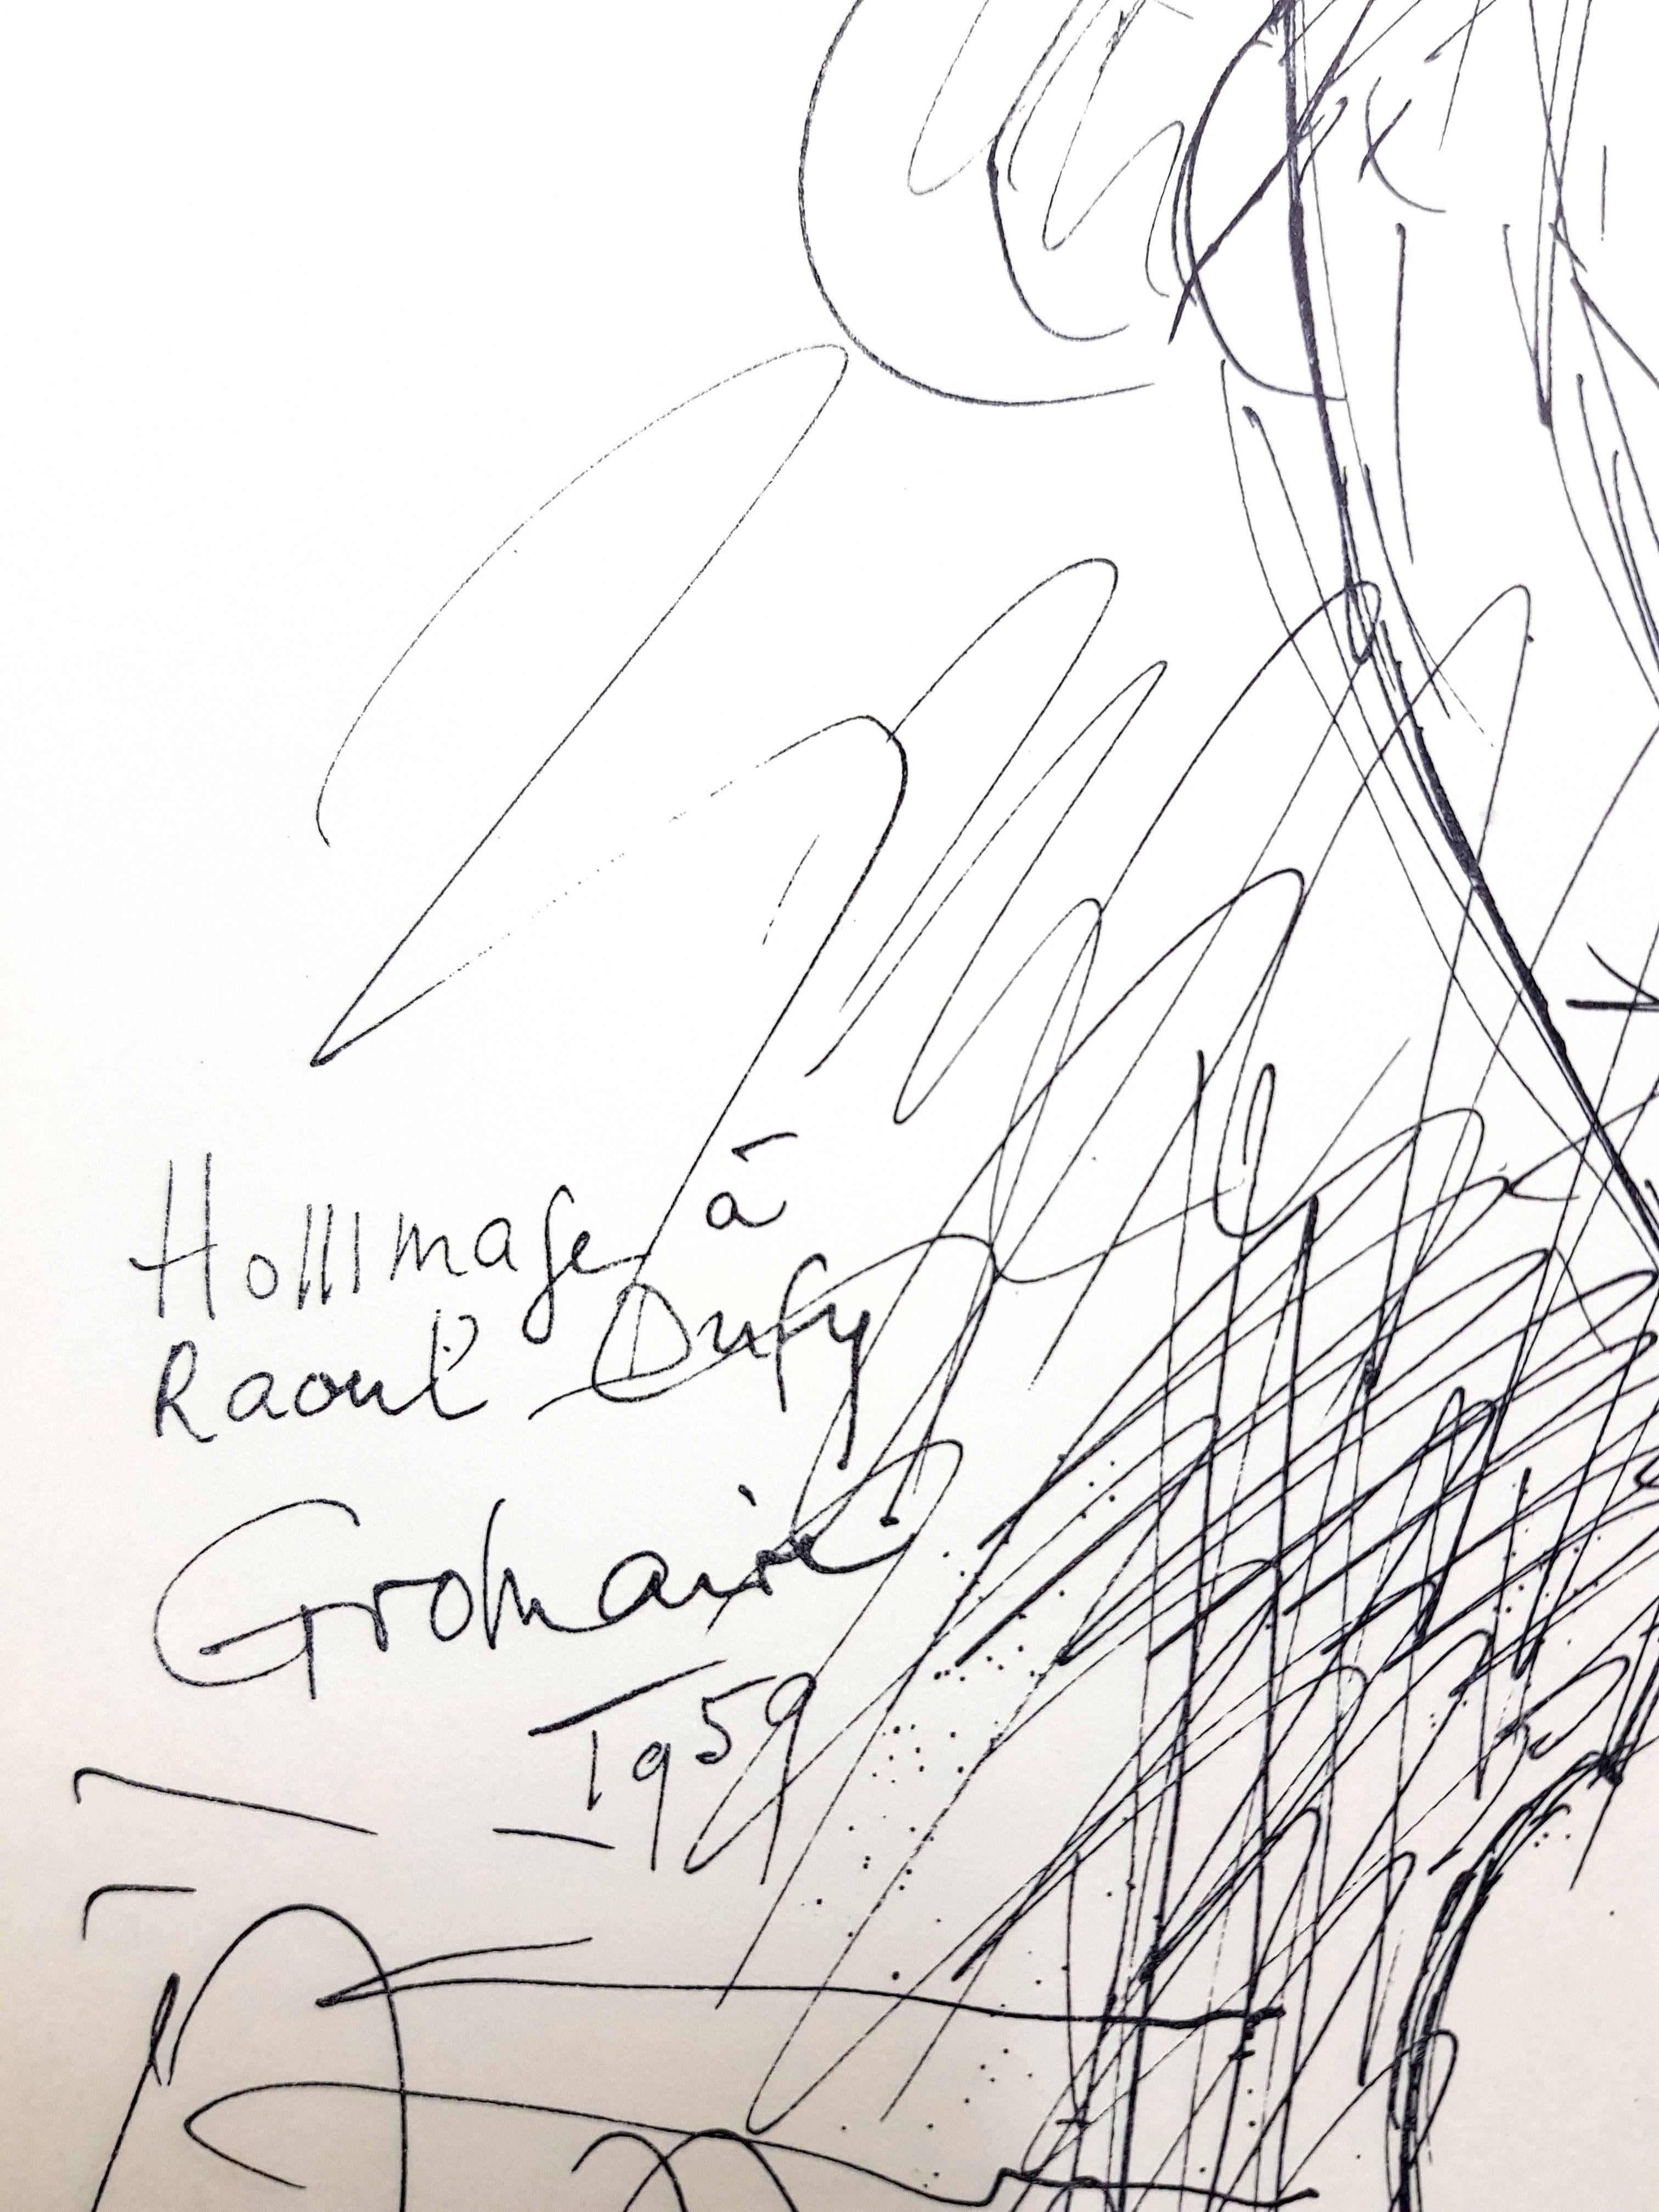 (after) Marcel Gromaire
Lithograph after a watercolor, published in the book "Lettre à mon peintre Raoul Dufy." Paris, Librairie Académique Perrin, 1965.
Printed signature
Dimensions: 30 x 24 cm
Condition : Excellent

Marcel Gromaire was